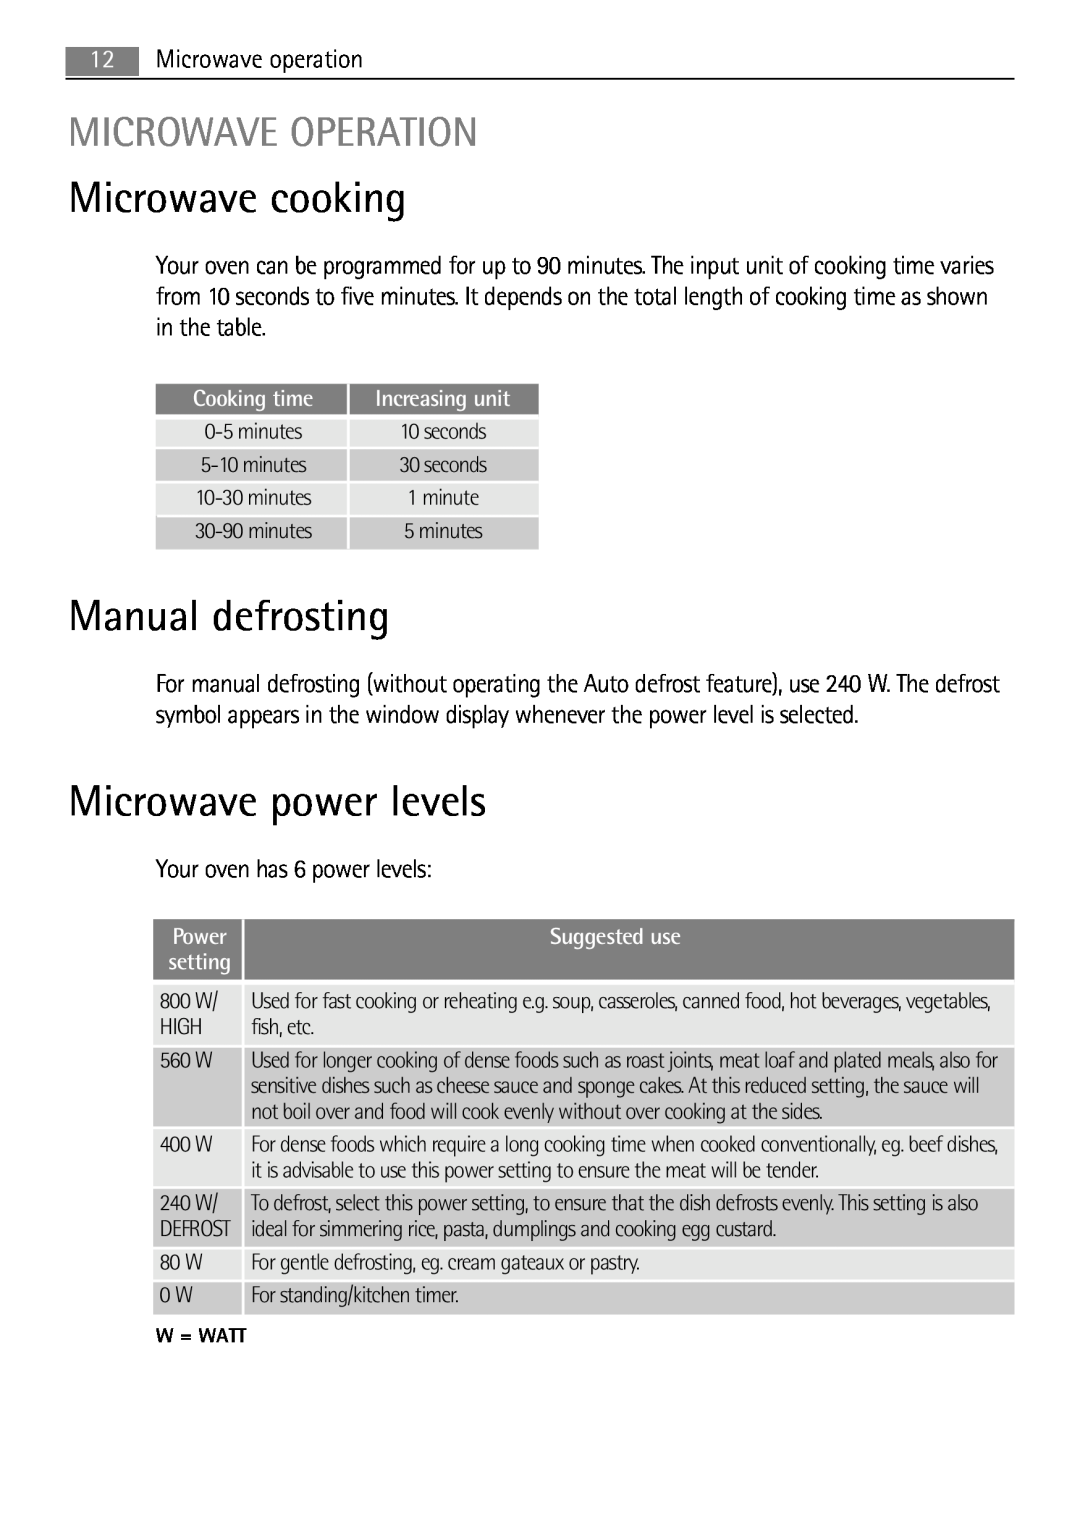 AEG MC1763E Manual defrosting, Microwave power levels, Microwave Operation, Microwave cooking, Power, Suggested use 